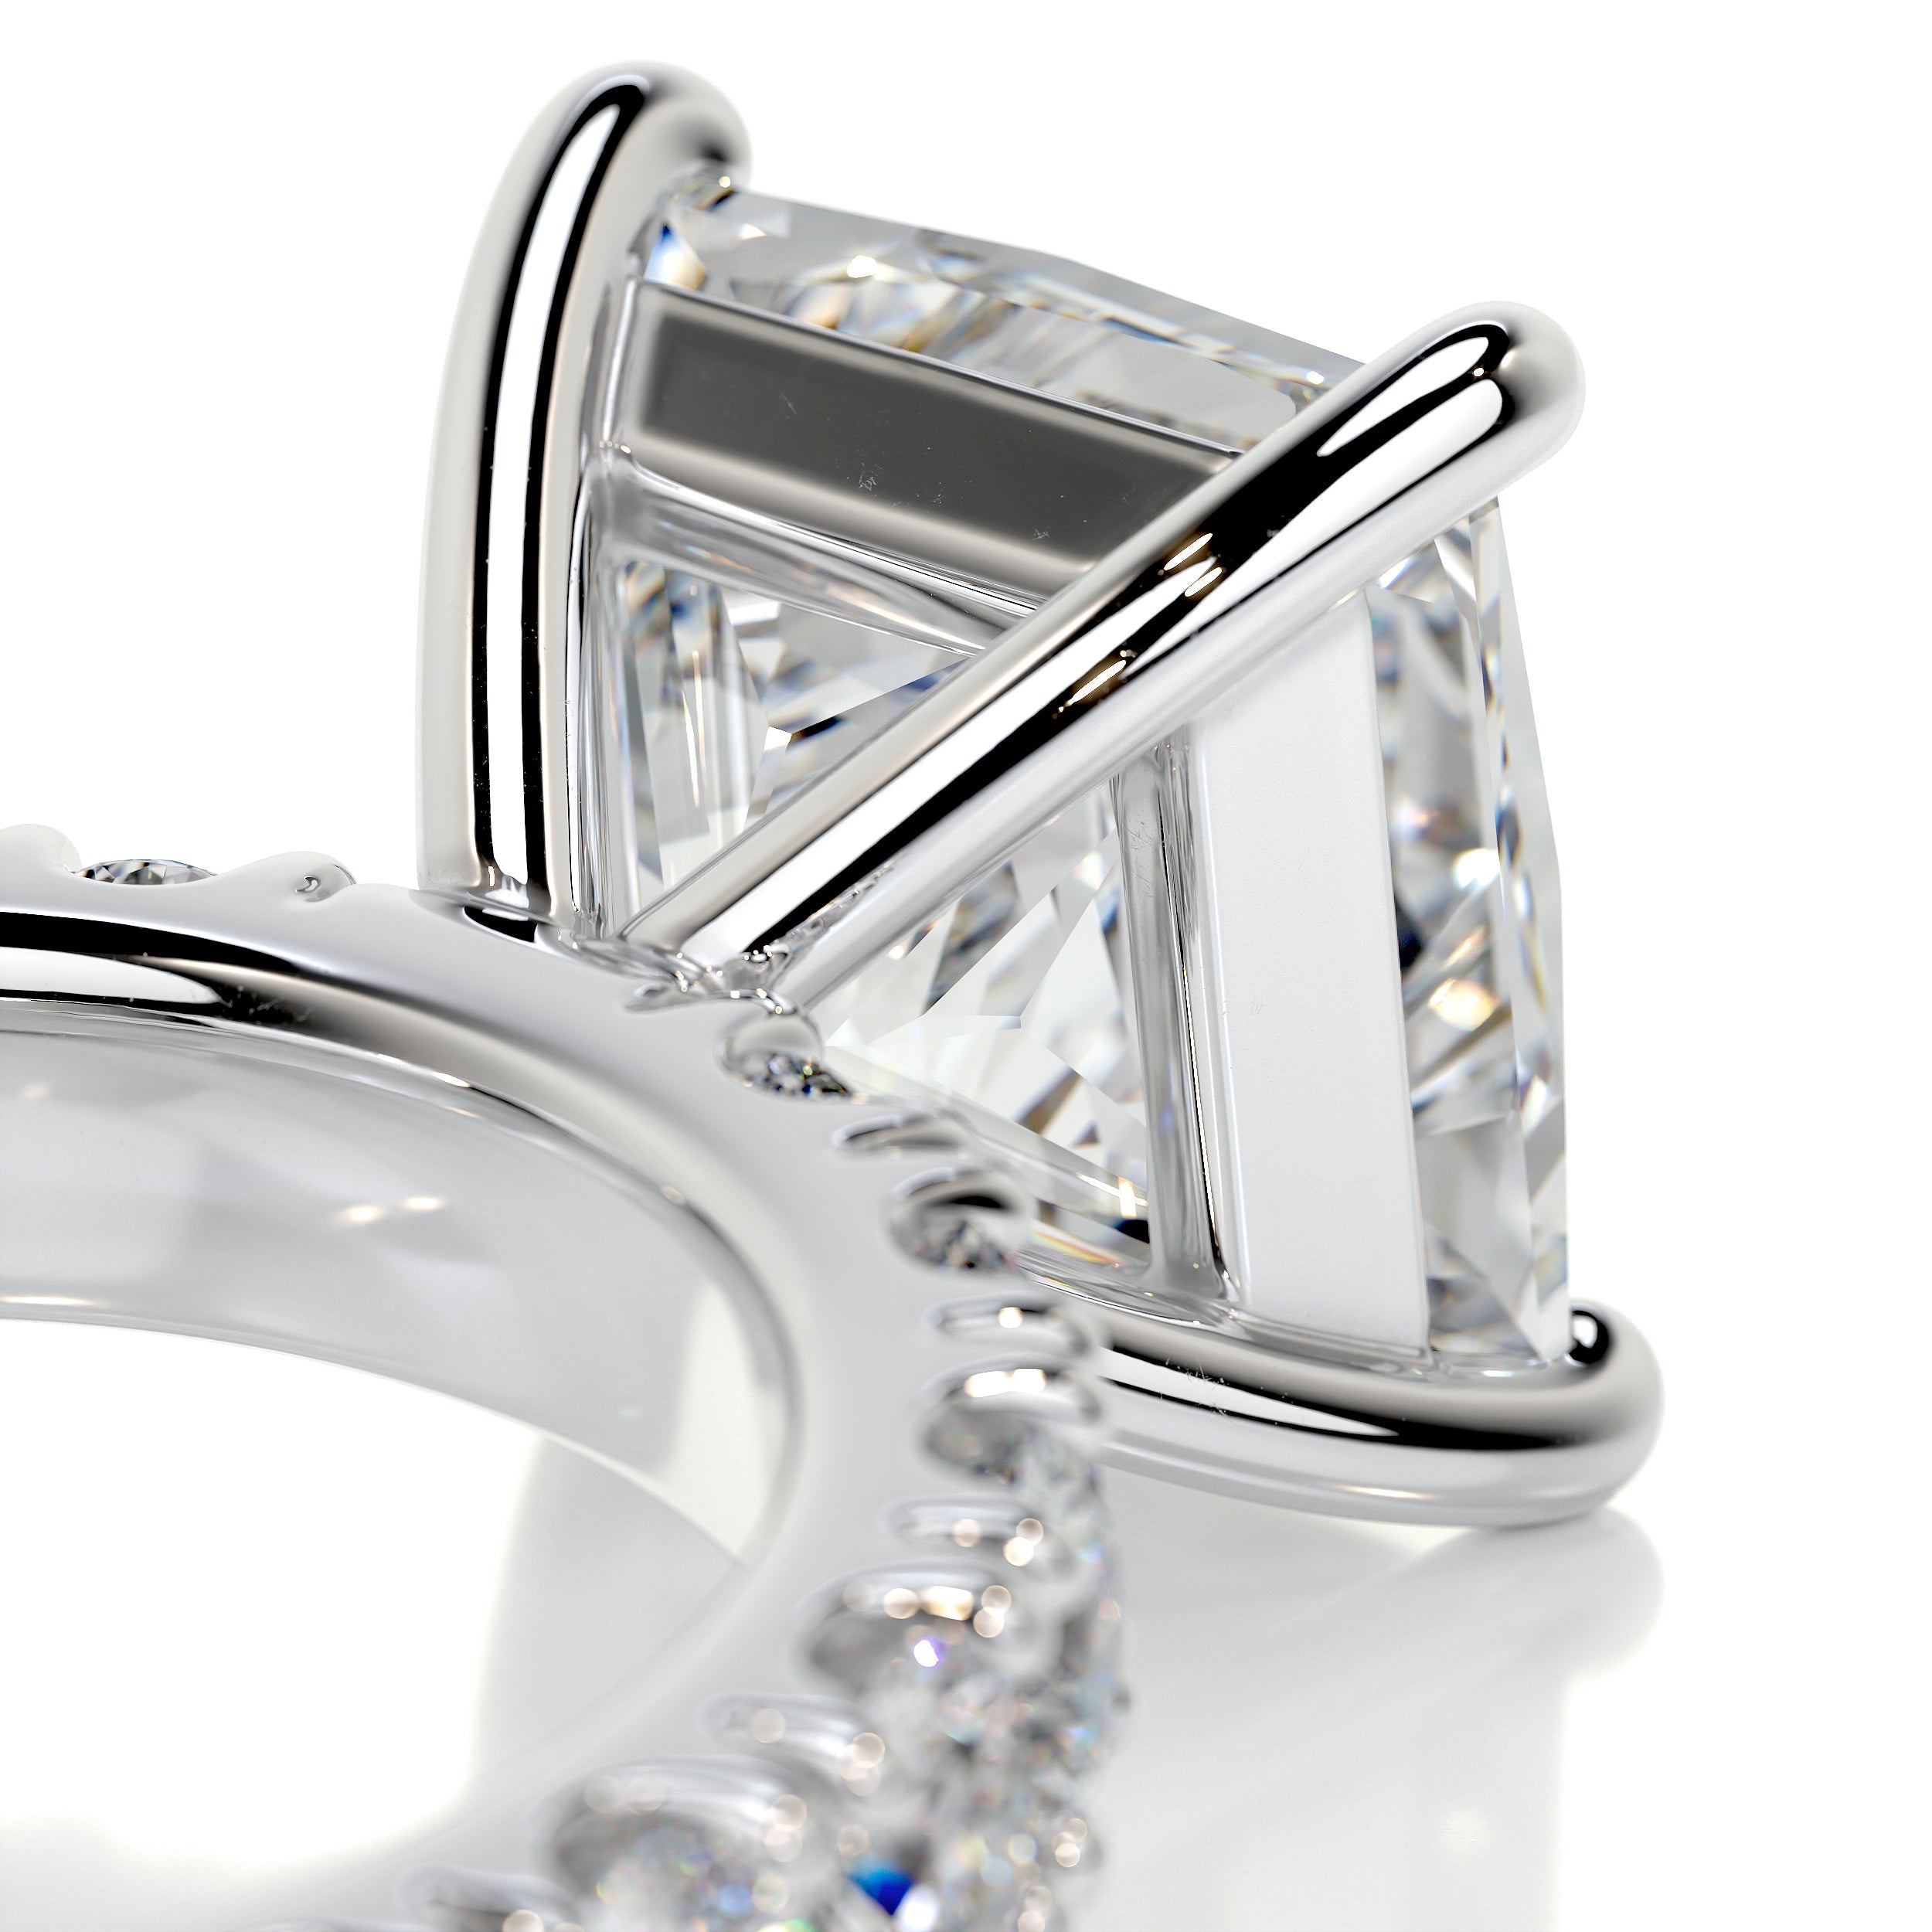 Molly Diamond Engagement Ring   (3.5 Carat) -Platinum